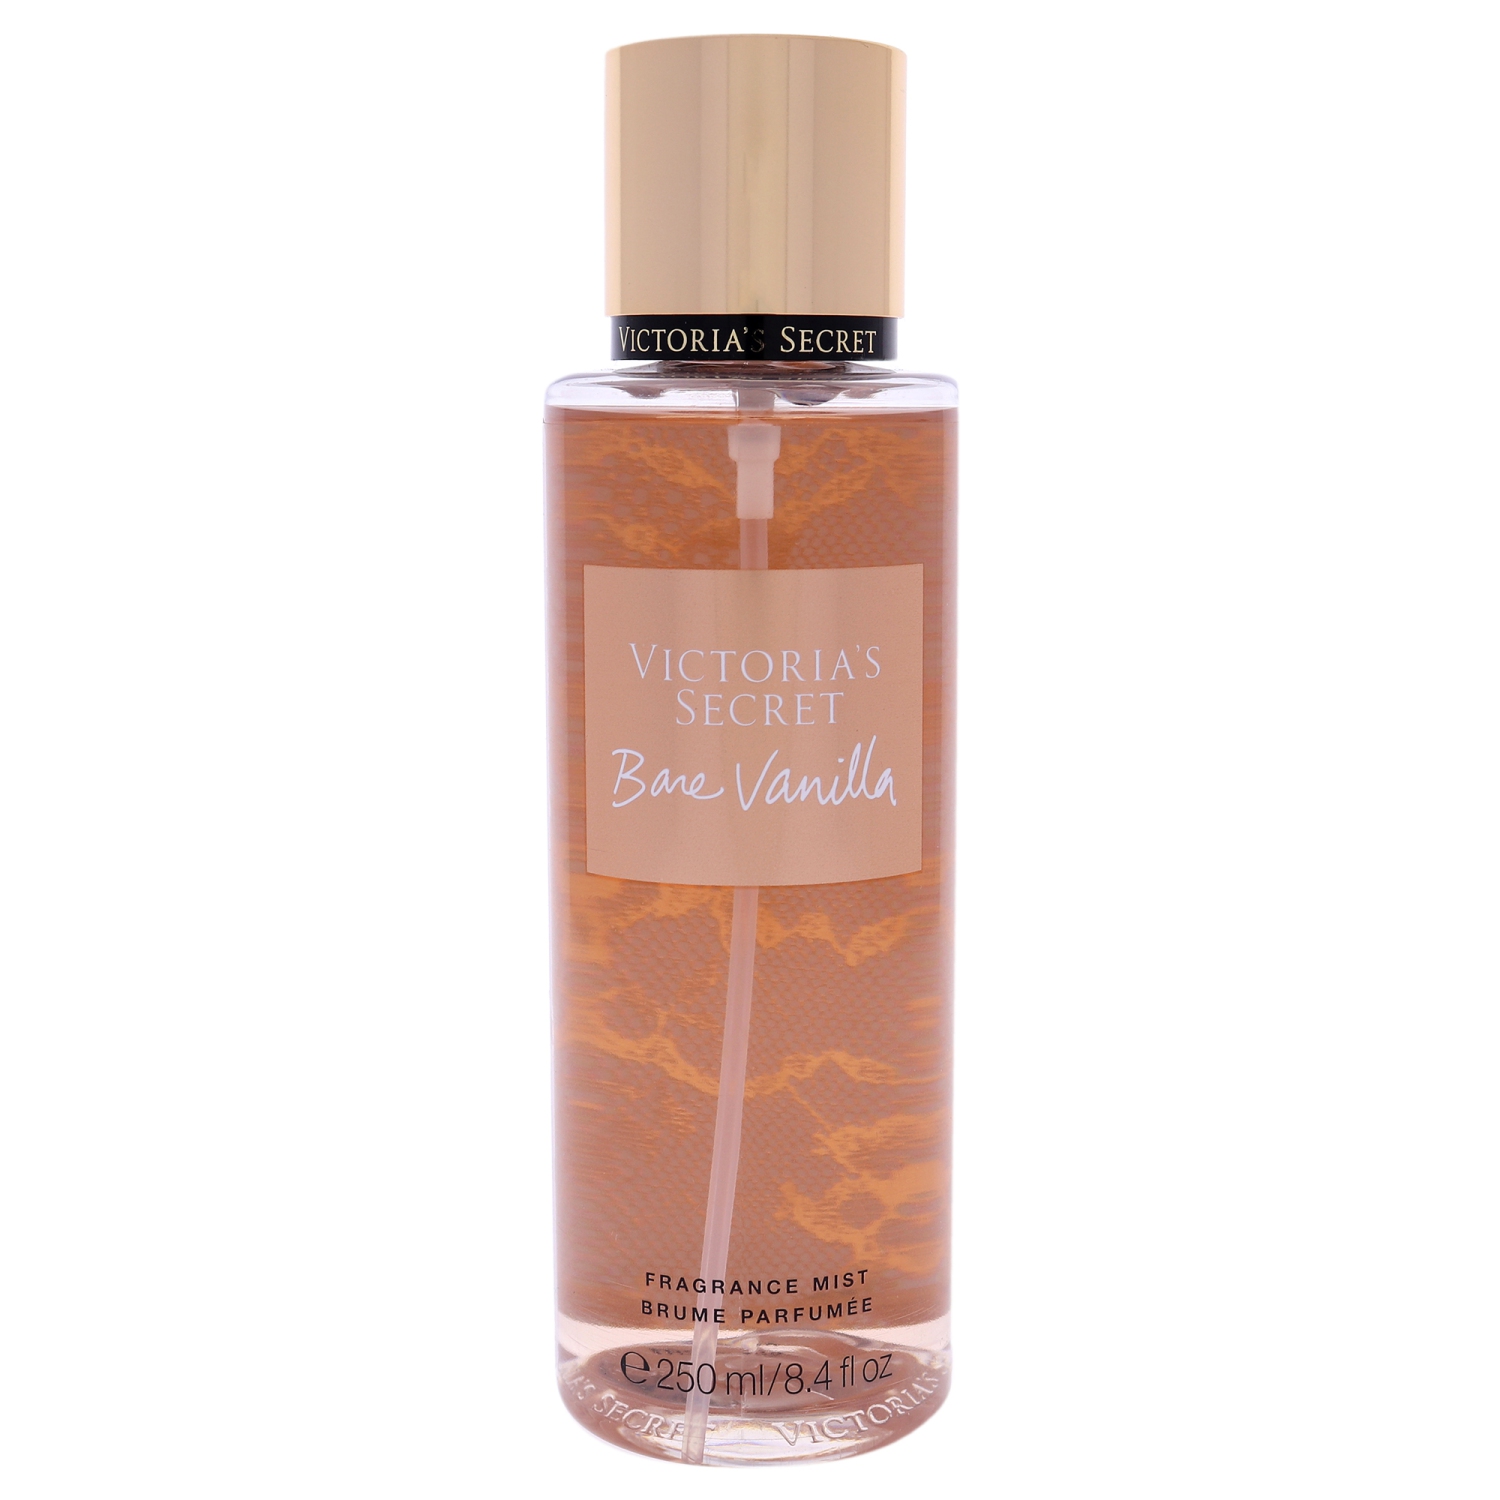 Bare Vanilla Fragrance Mist by Victorias Secret for Women - 8.4 oz Fragrance Mist